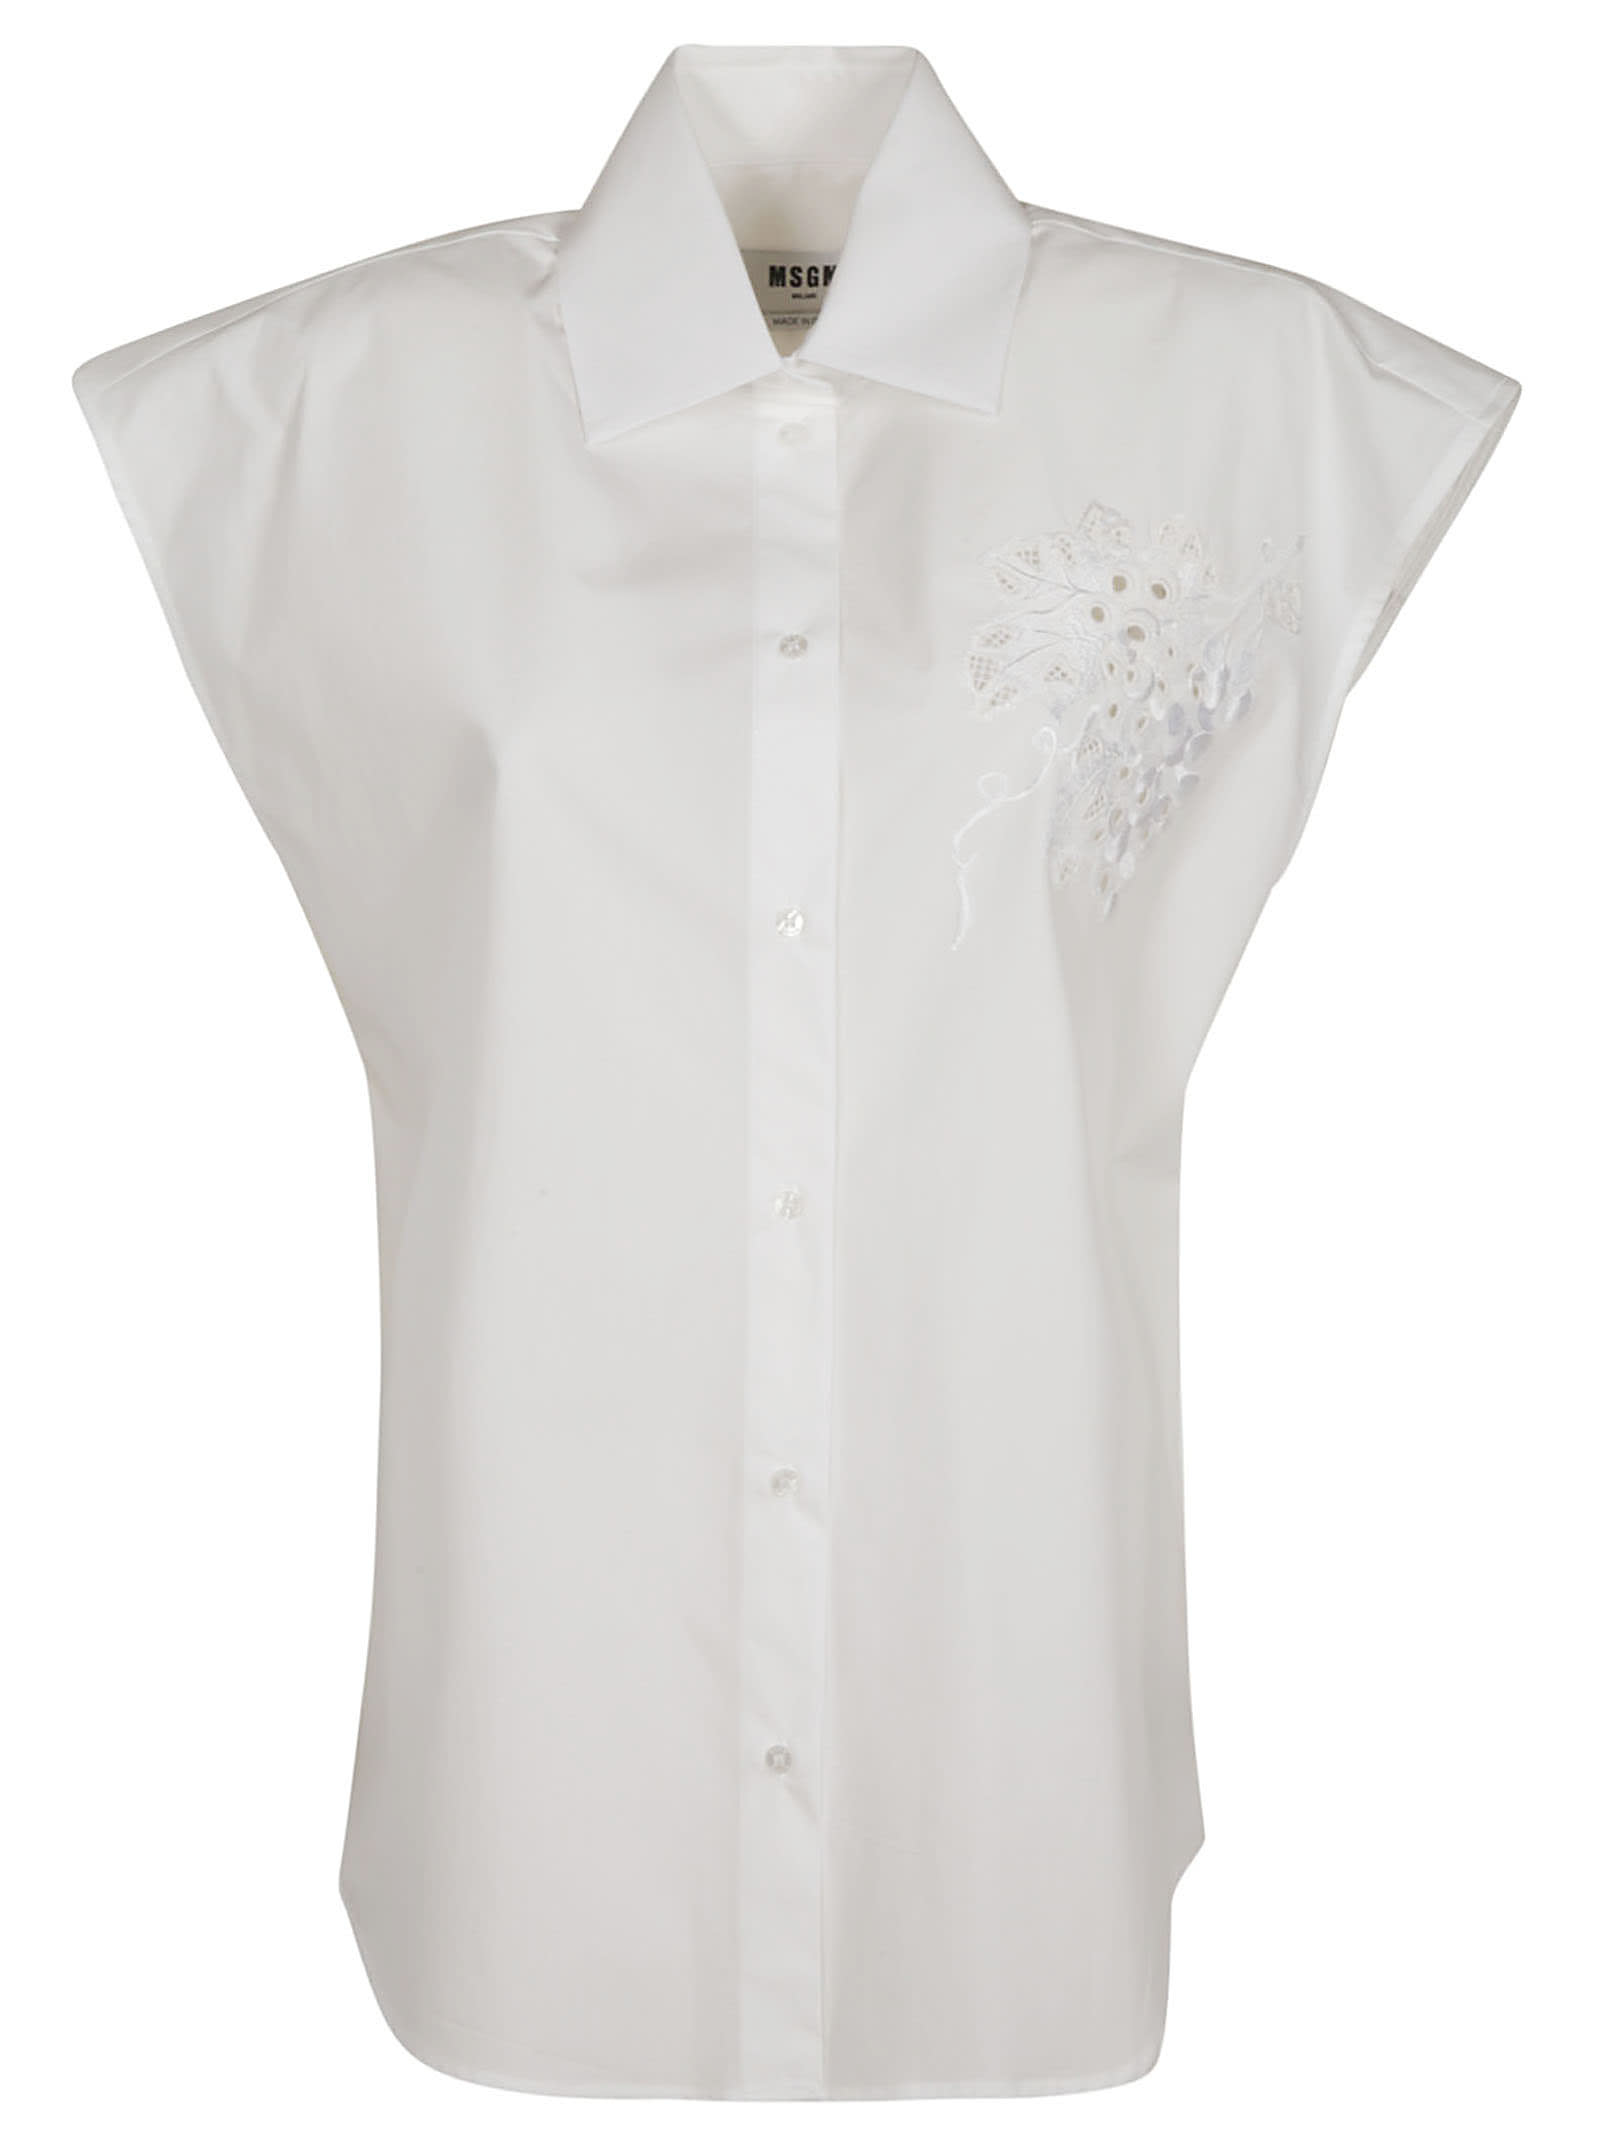 MSGM Embroidered Chest Sleeveless Shirt